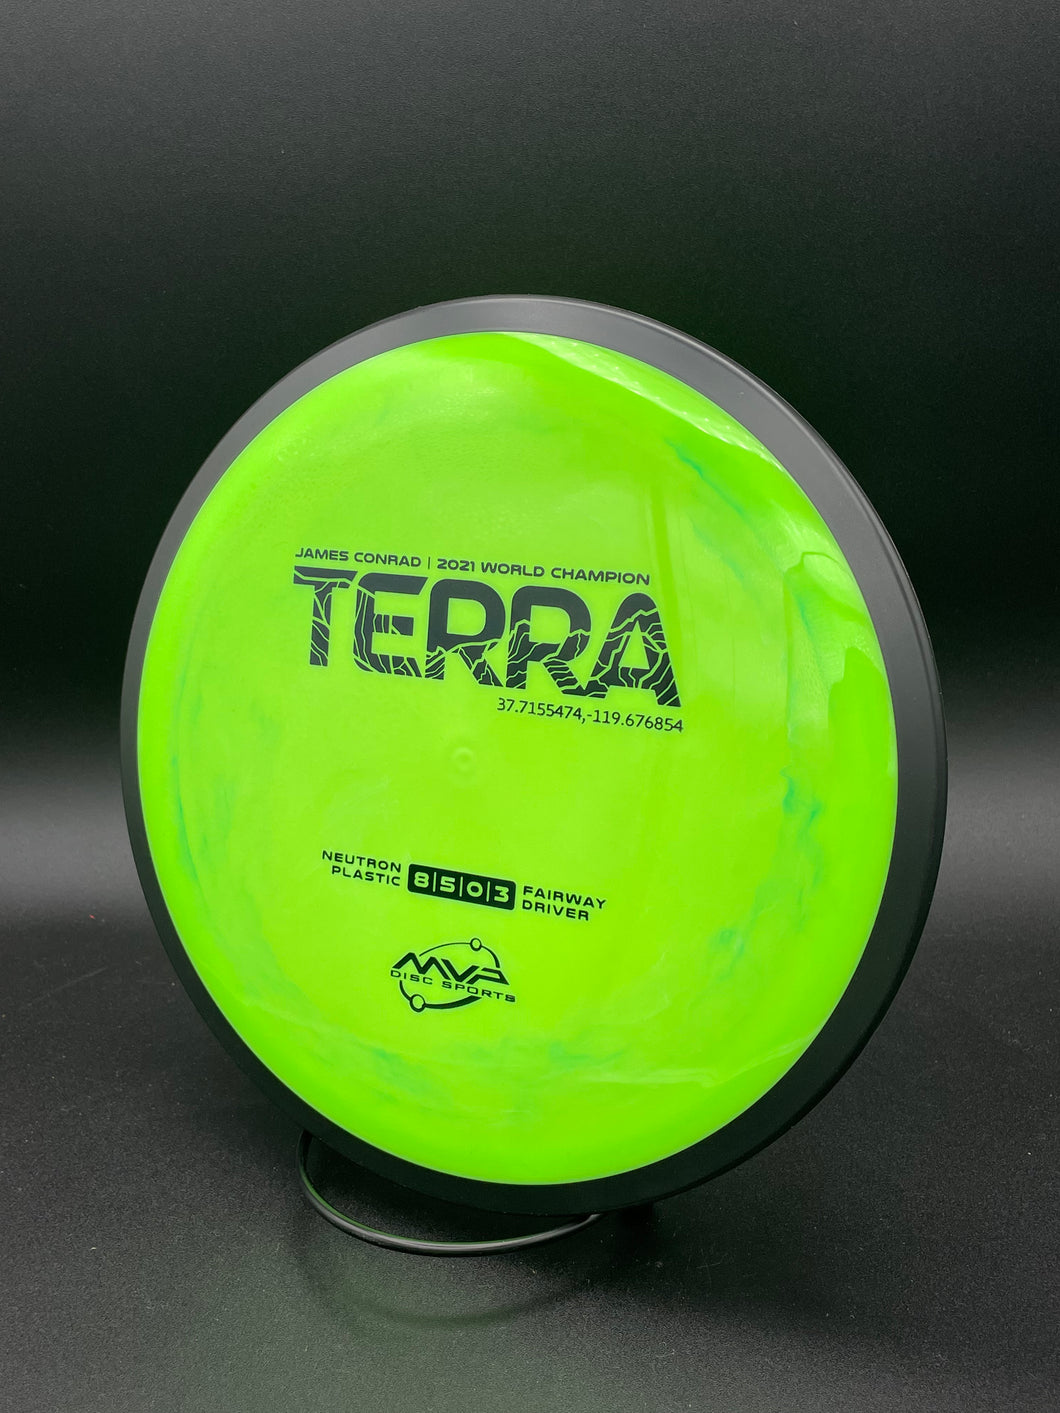 Terra / MVP / Neutron / James Conrad SE